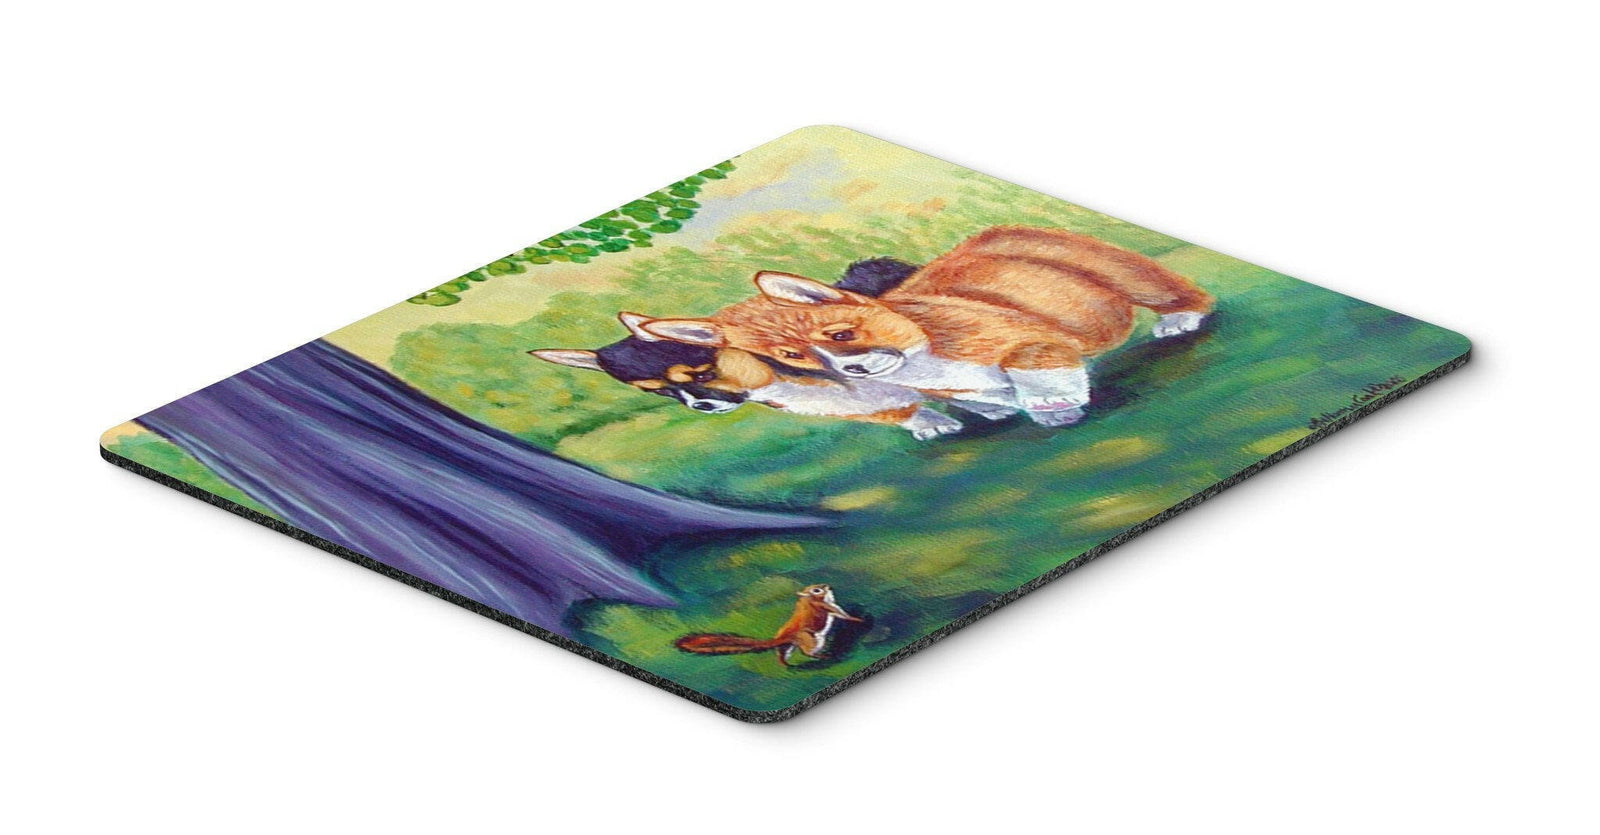 Corgi Mouse Pad / Hot Pad / Trivet by Caroline's Treasures